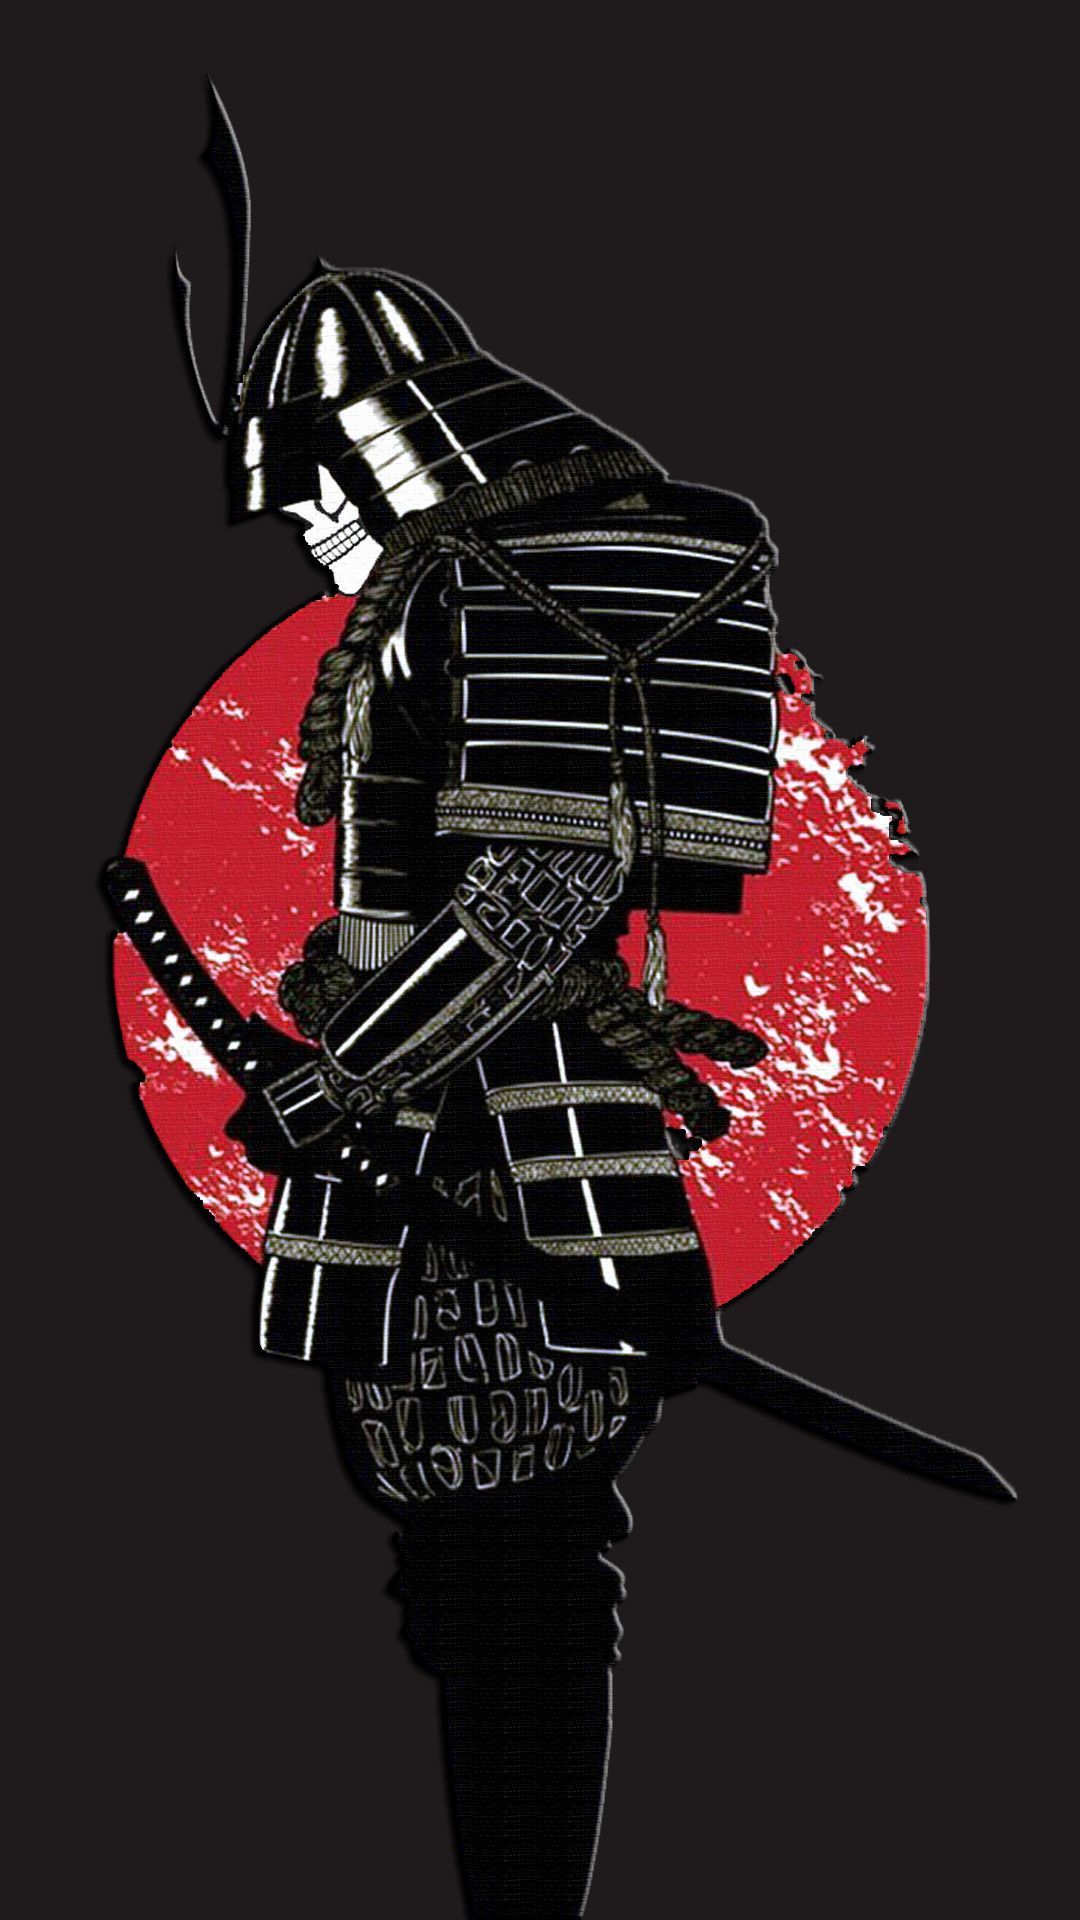 HD Samurai Wallpaper. Samurai wallpaper, Samurai wallpaper, Samurai art